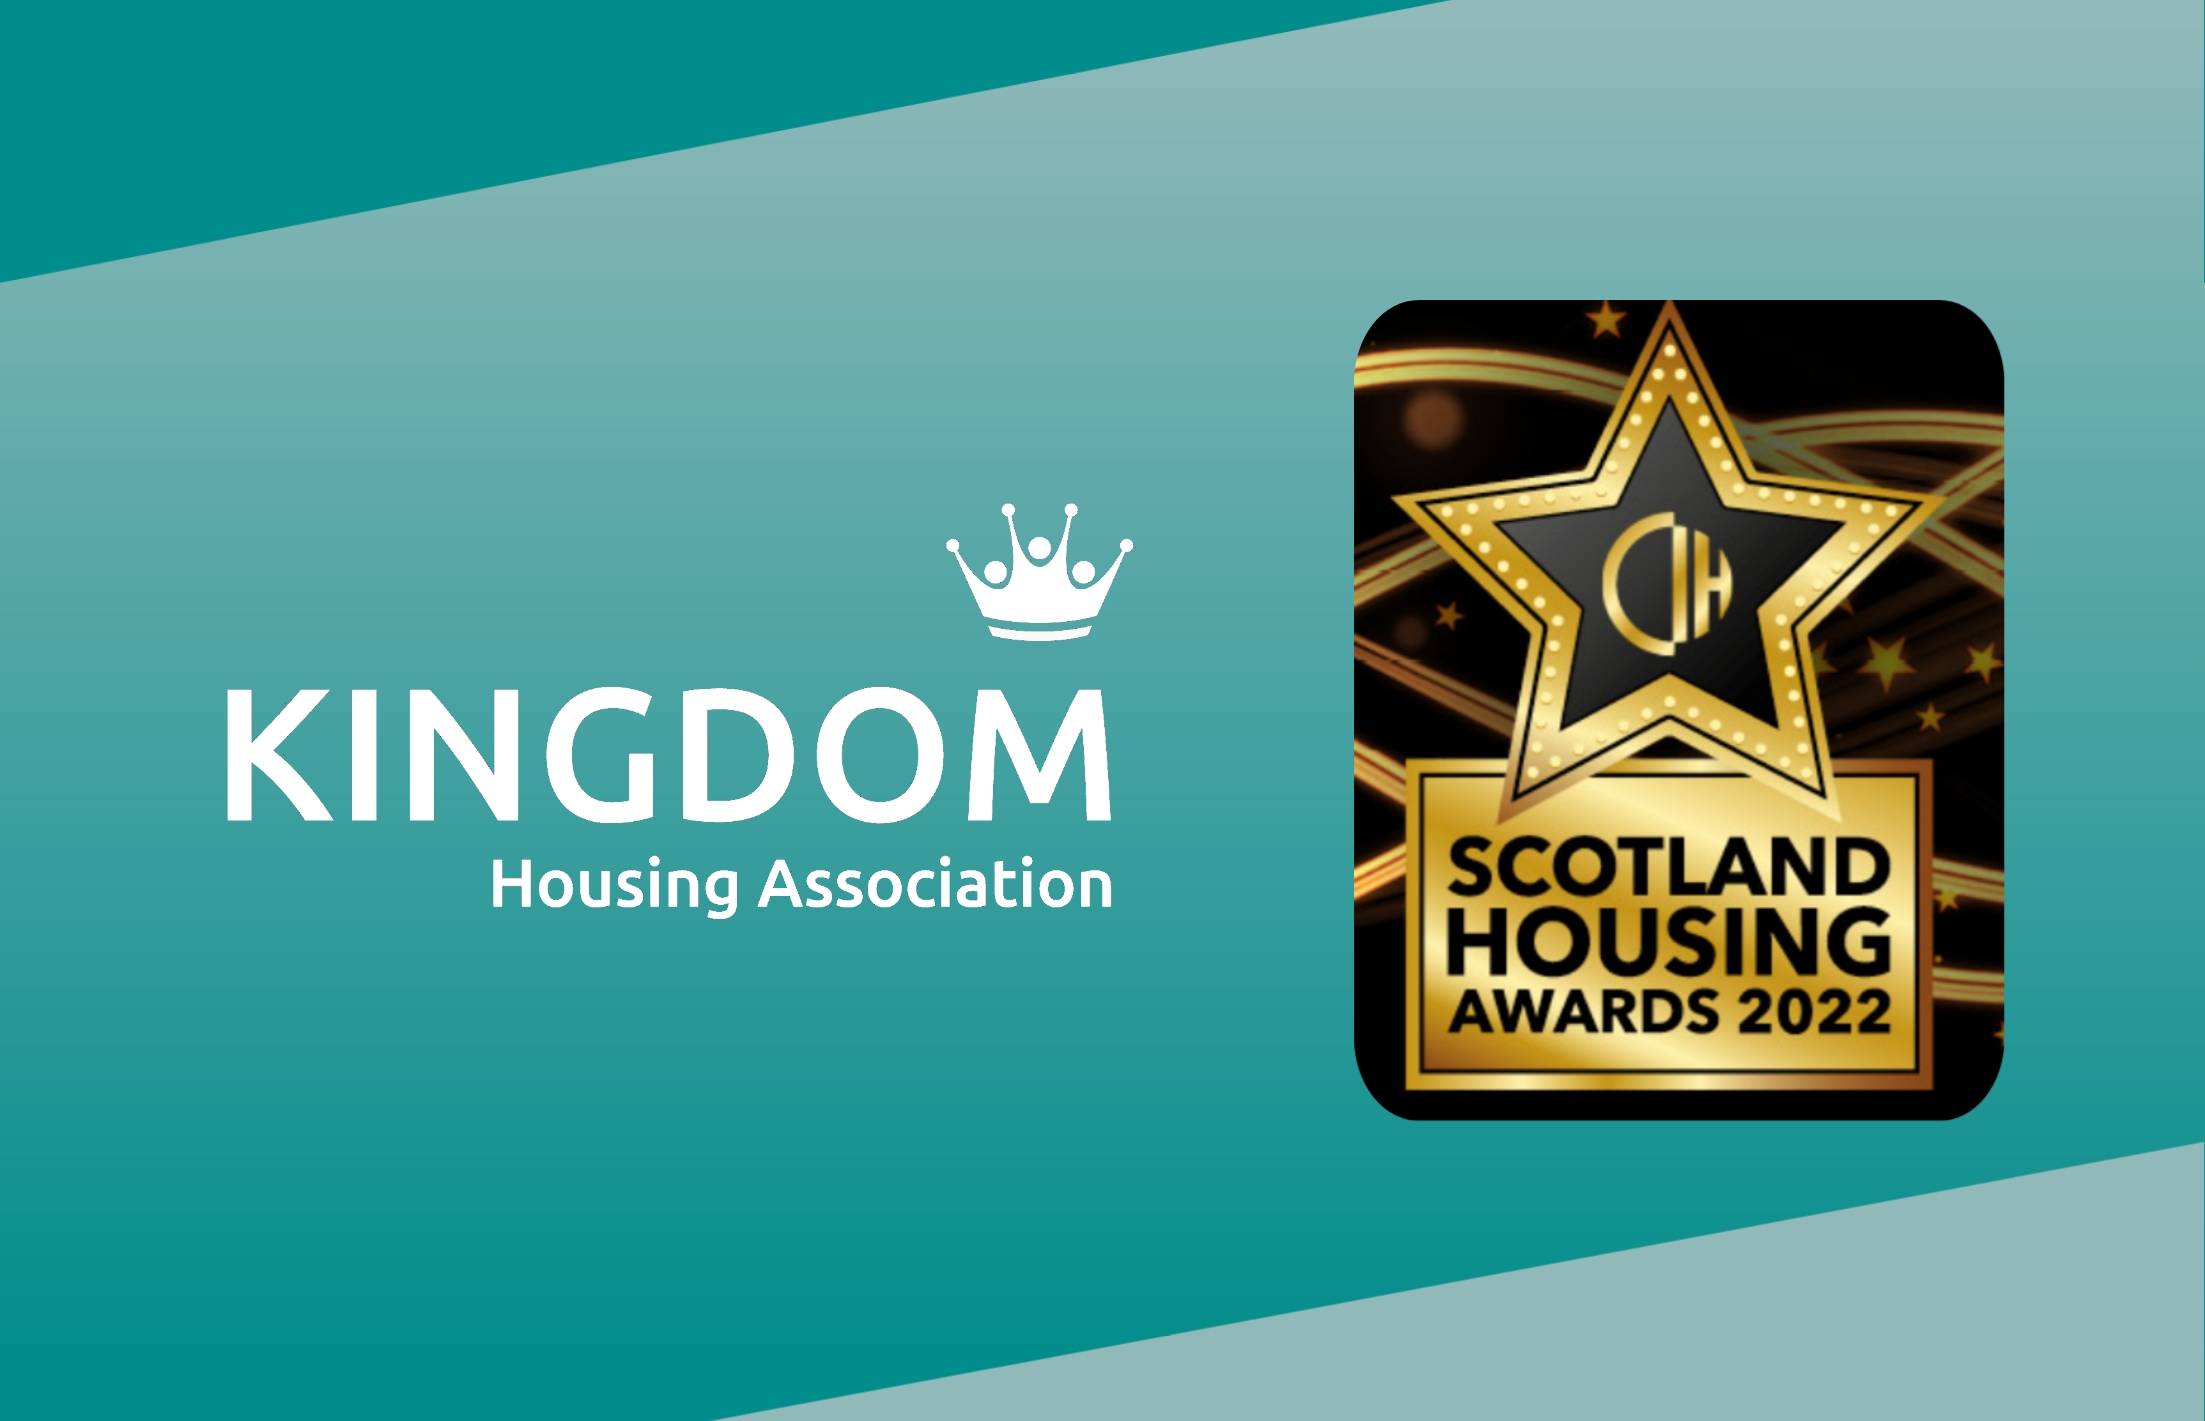 Kingdom’s record shortlist success at CIH Scotland Housing Awards